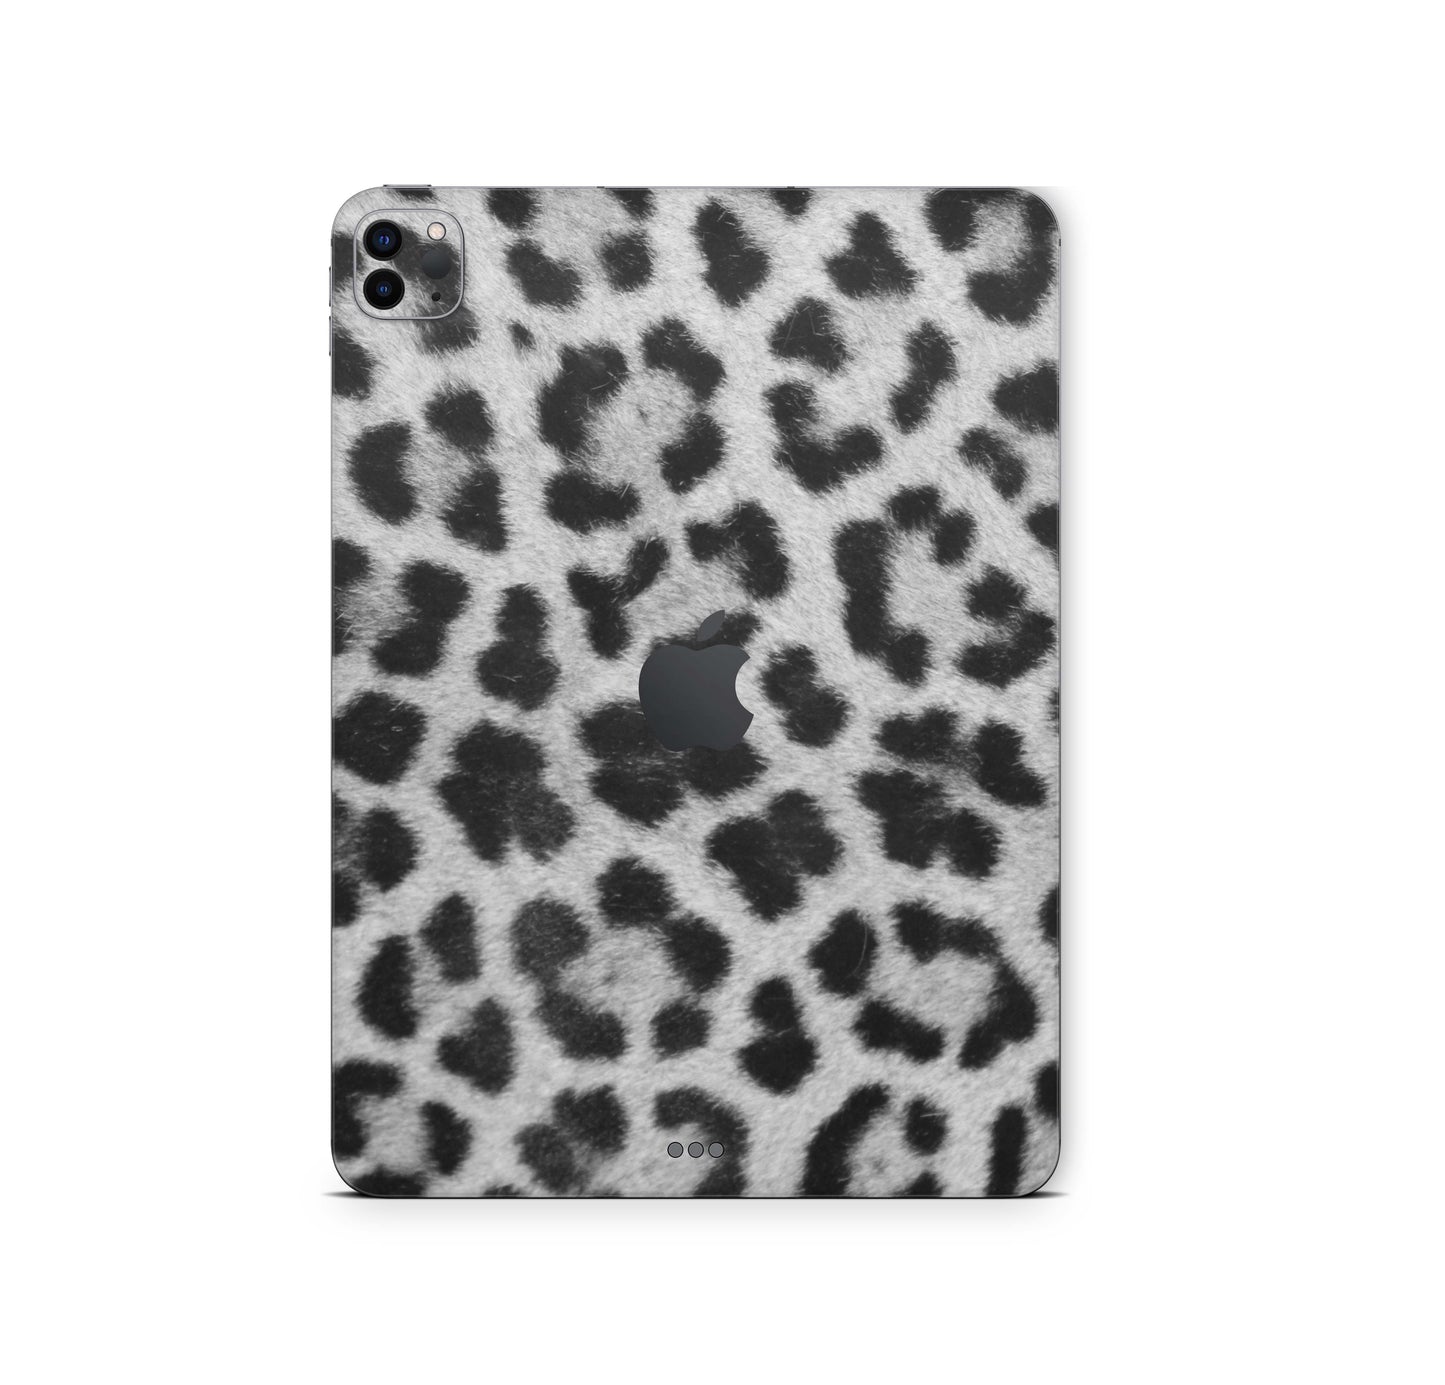 iPad Pro Skin 11" 3.Generation M1 2021 Design Cover Folie Vinyl Skins & Wraps Aufkleber Skins4u Leopard-grau  